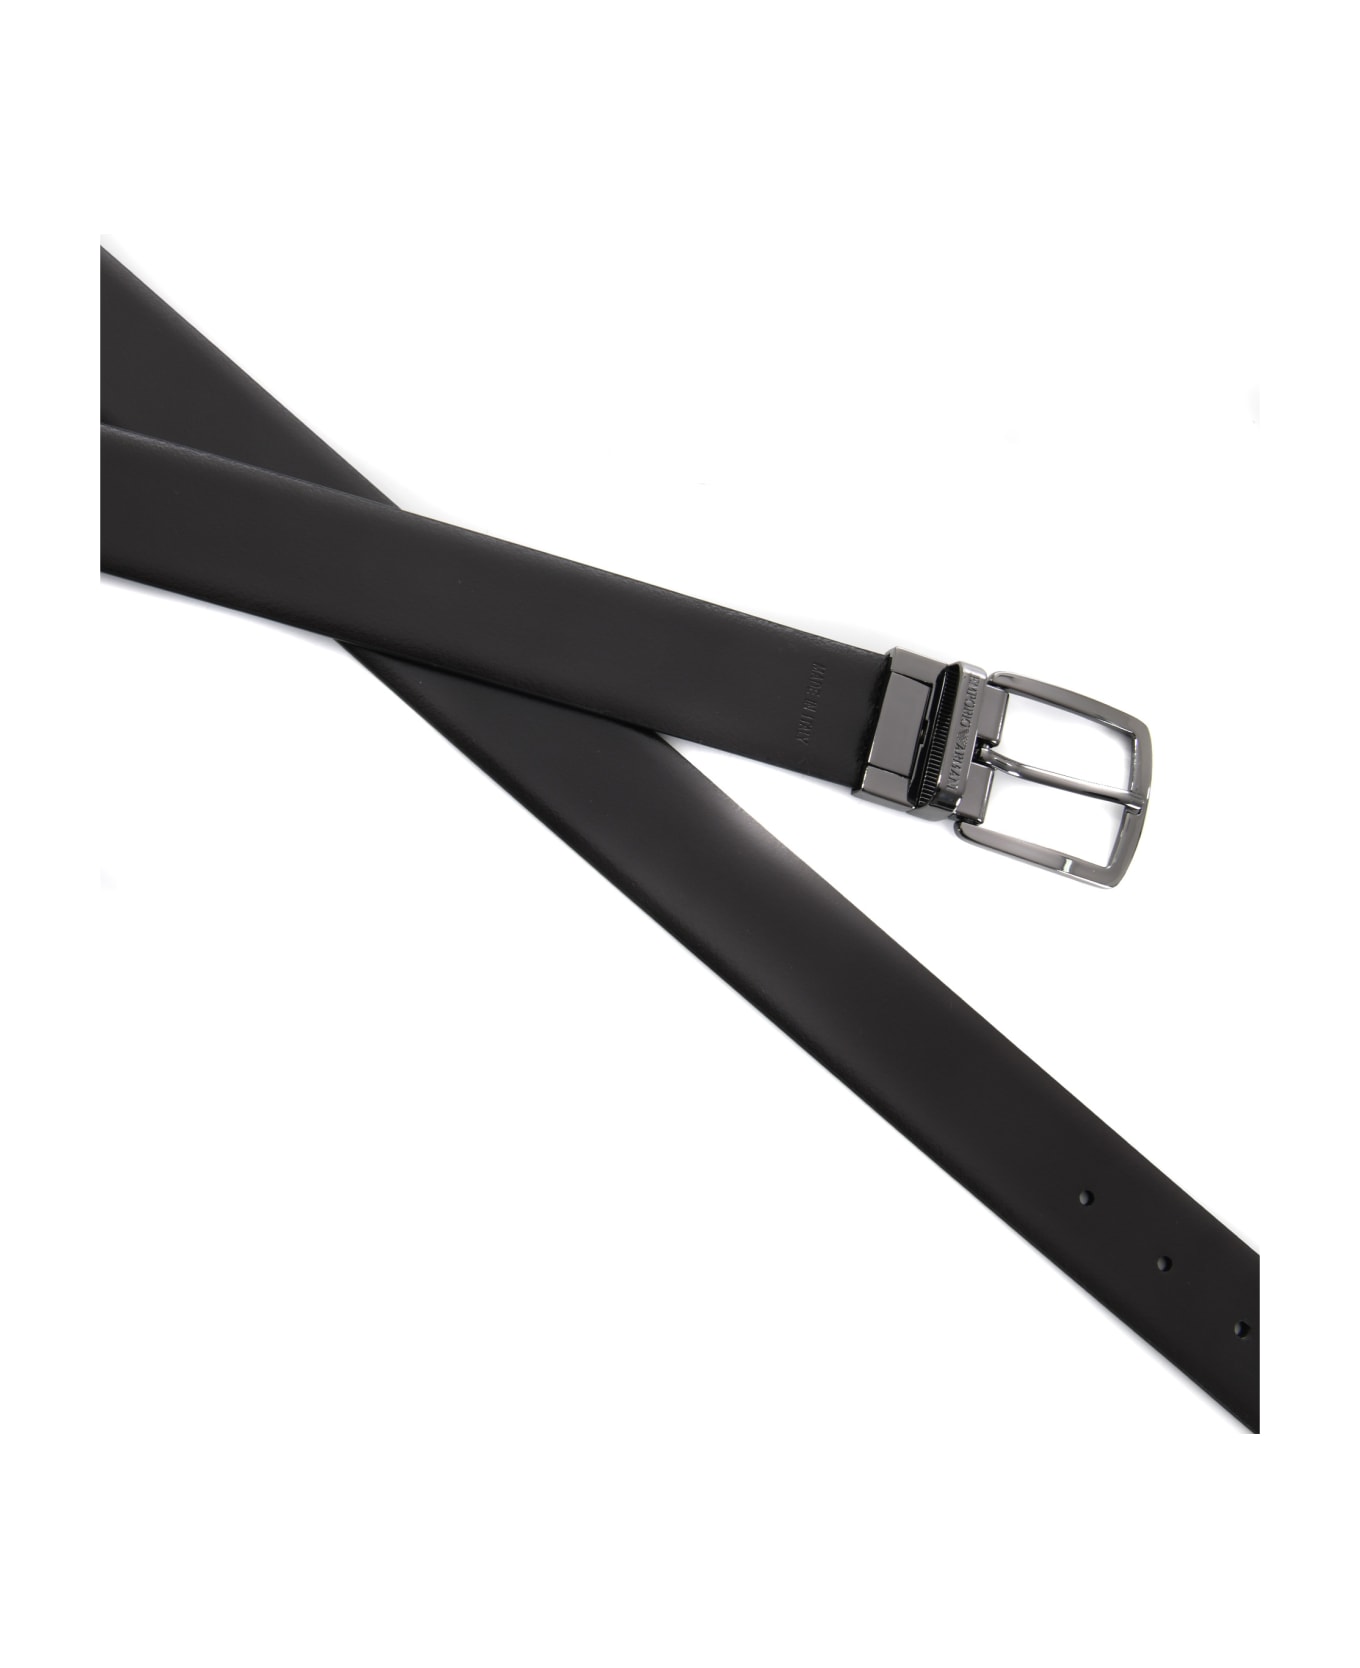 Emporio Armani Reversible Belt In Leather - Nero/moro ベルト